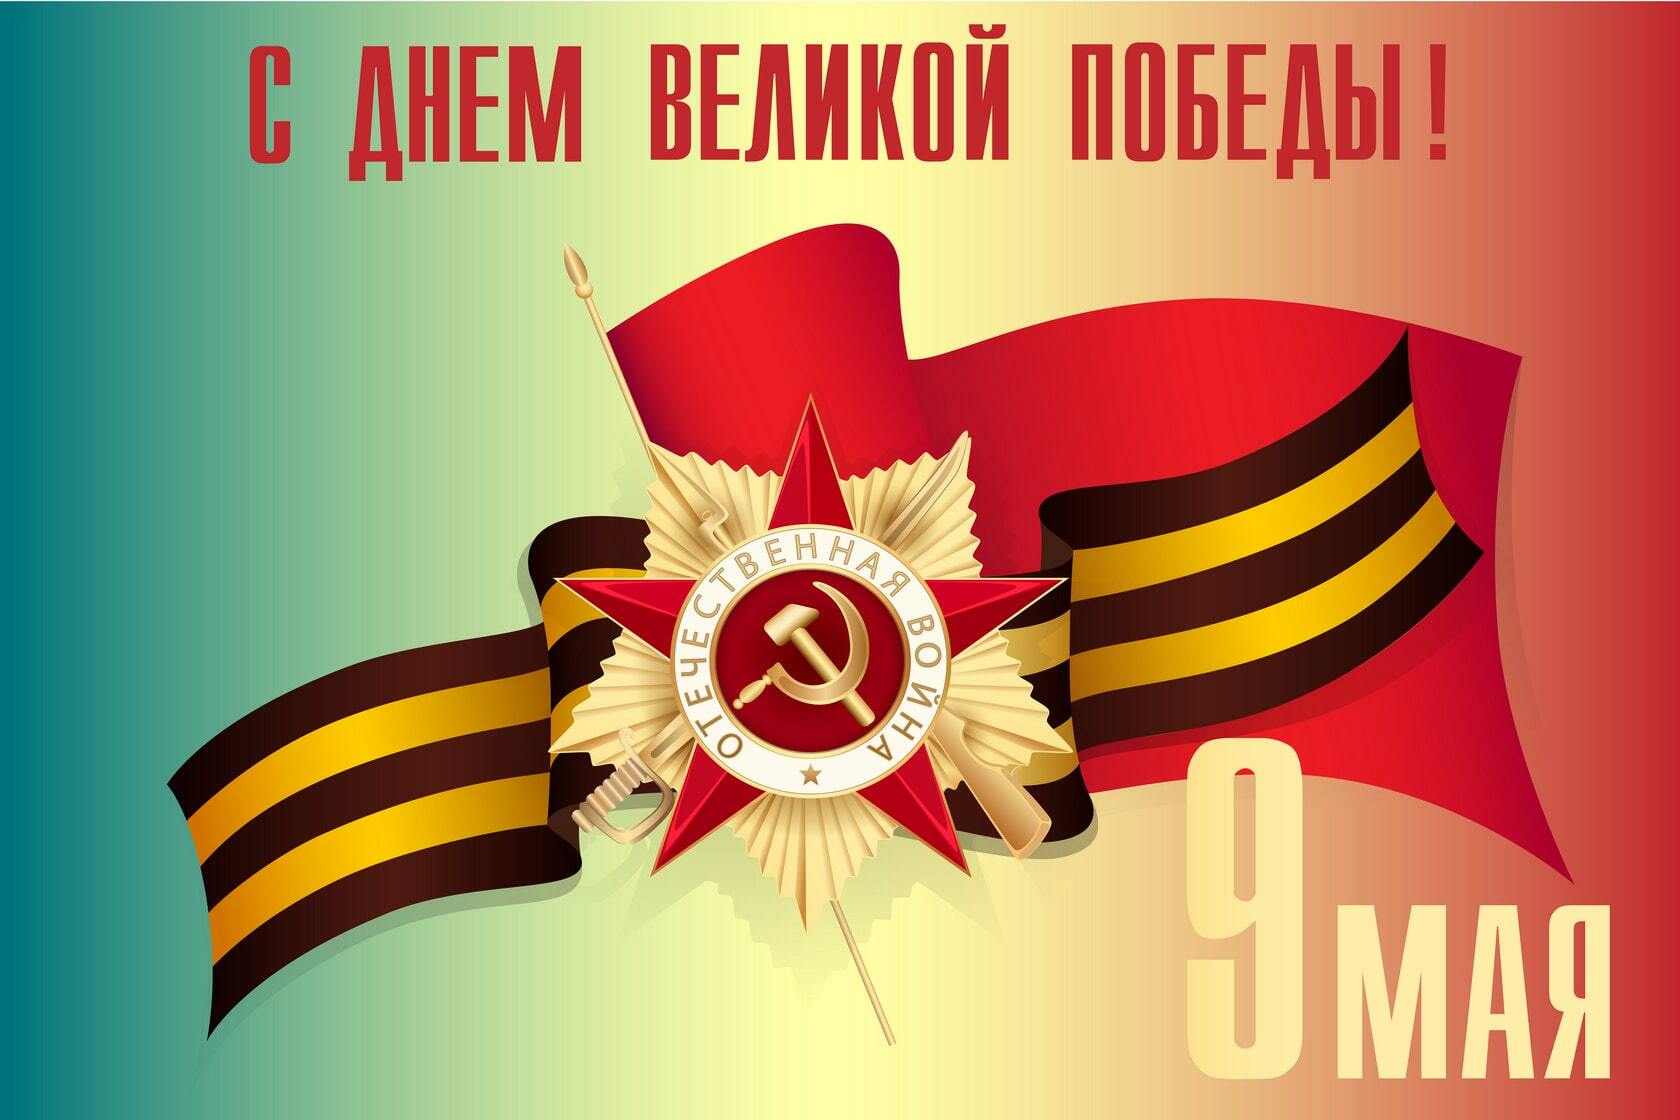 9 мая русский язык. 9 Мая плакат дизайн 41-45.